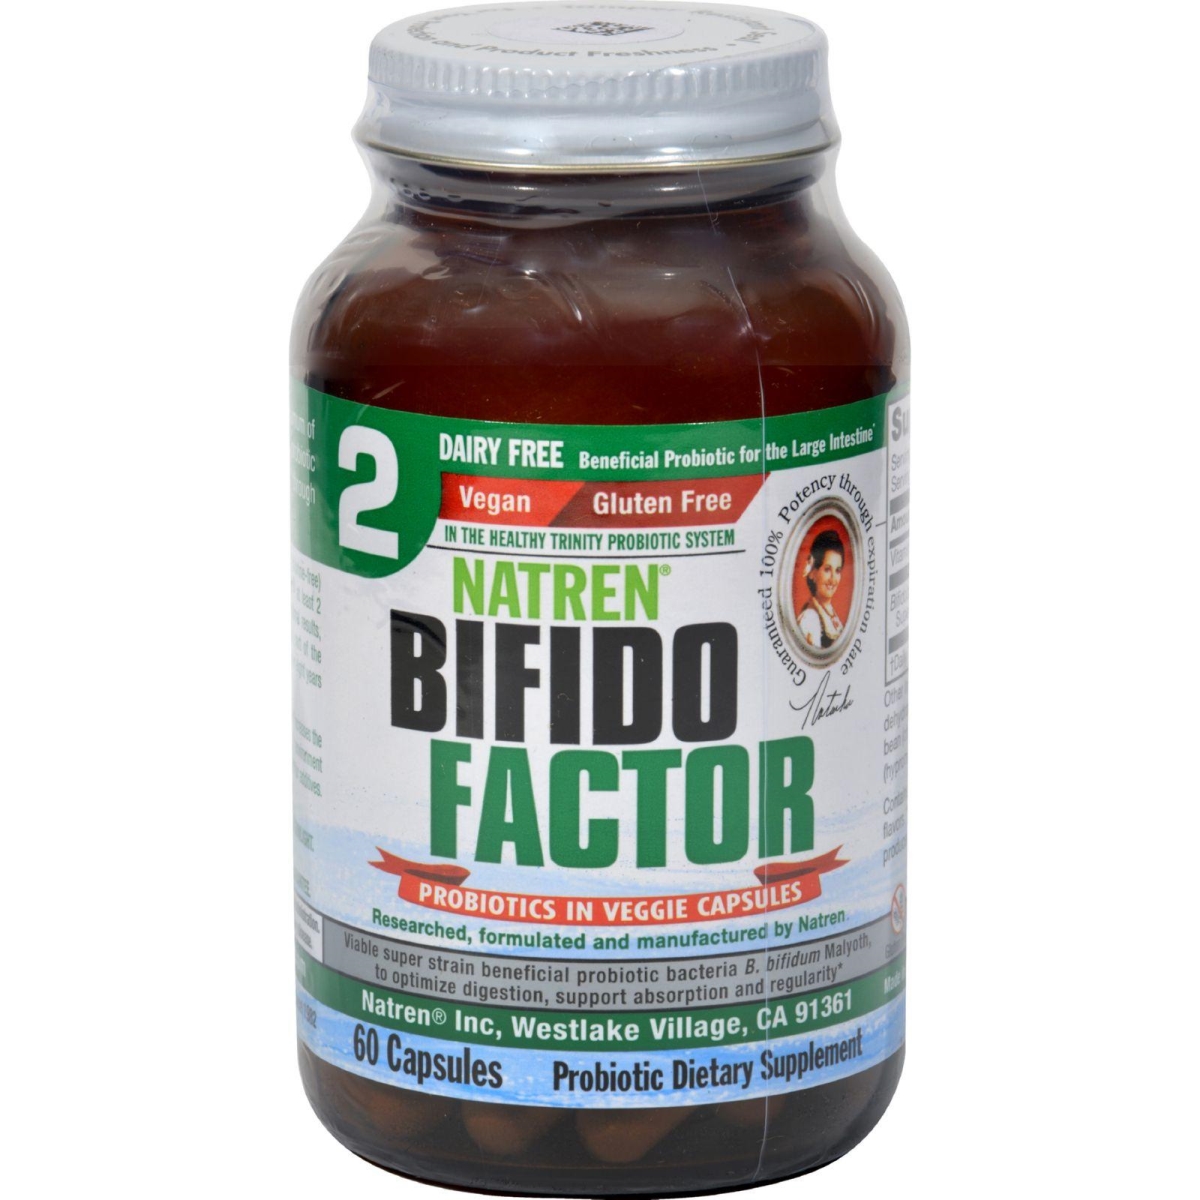 Hg0310169 Bifido Factor Dairy Free - 60 Capsules